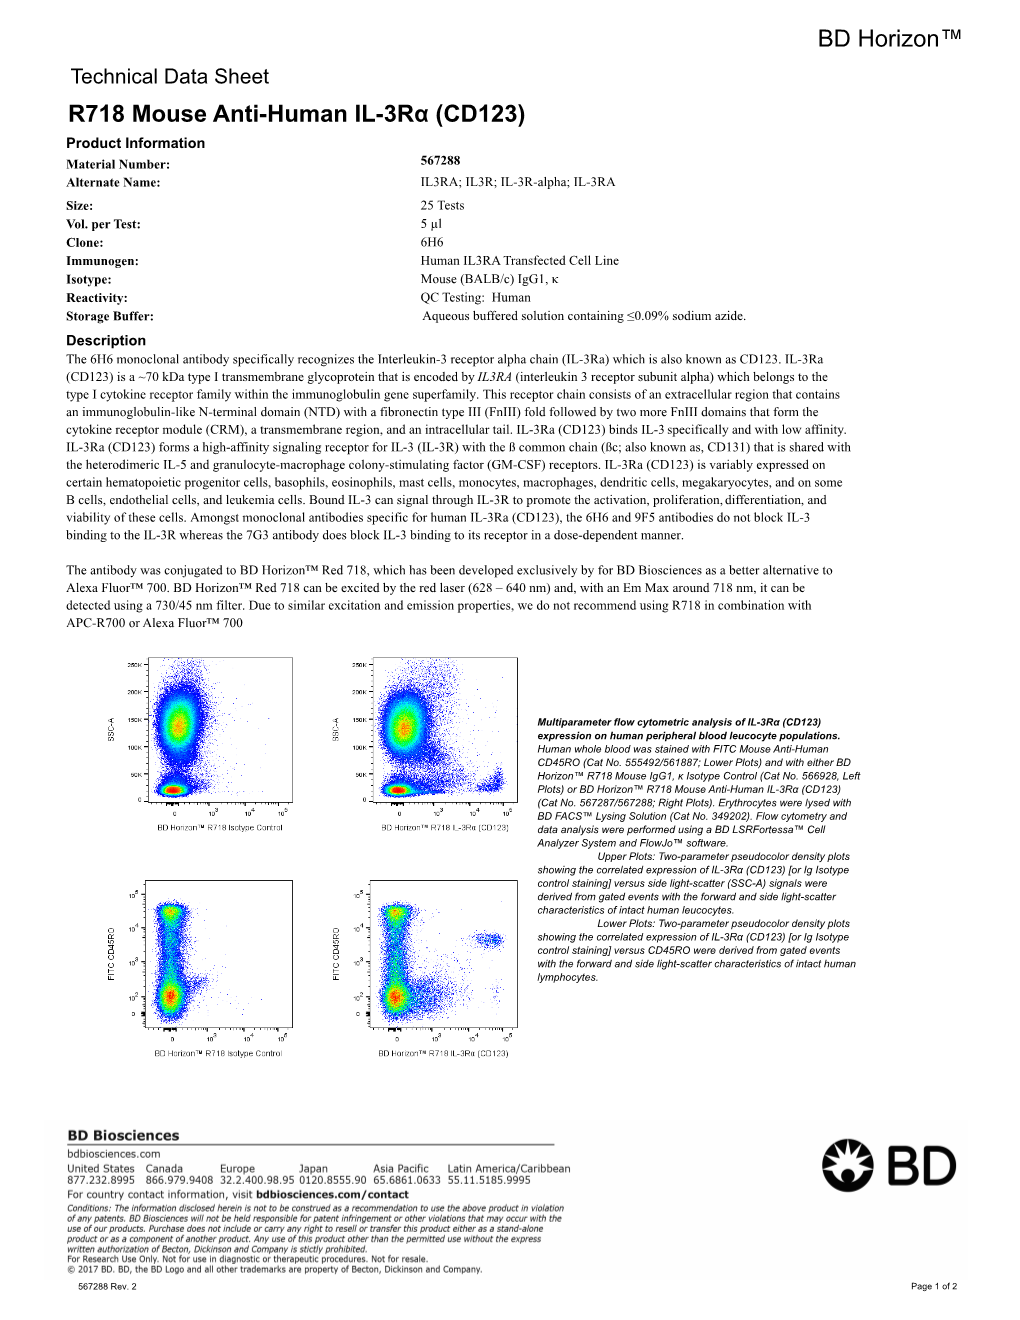 BD Horizon™ R718 Mouse Anti-Human IL-3Rα (CD123) (Cat No